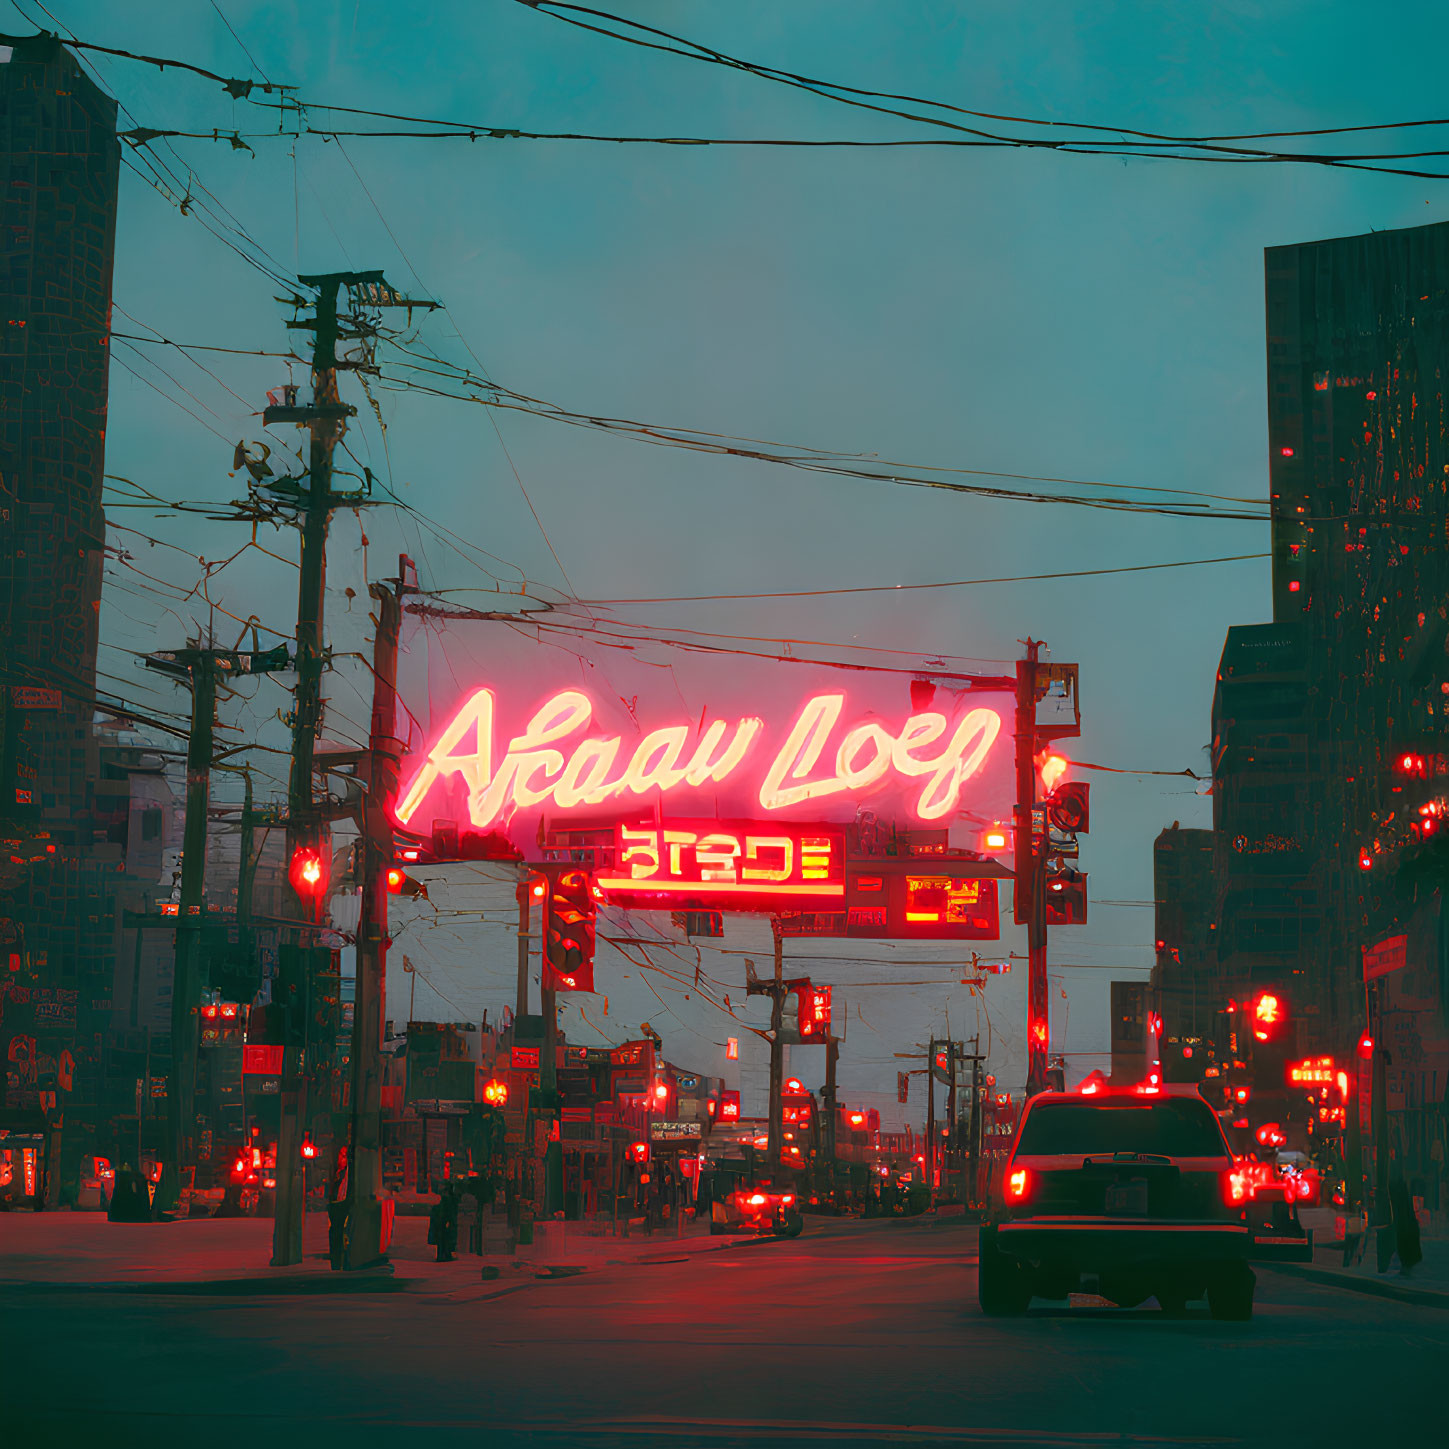 Urban Twilight City Scene with Neon Sign, Cars, and Dusky Sky